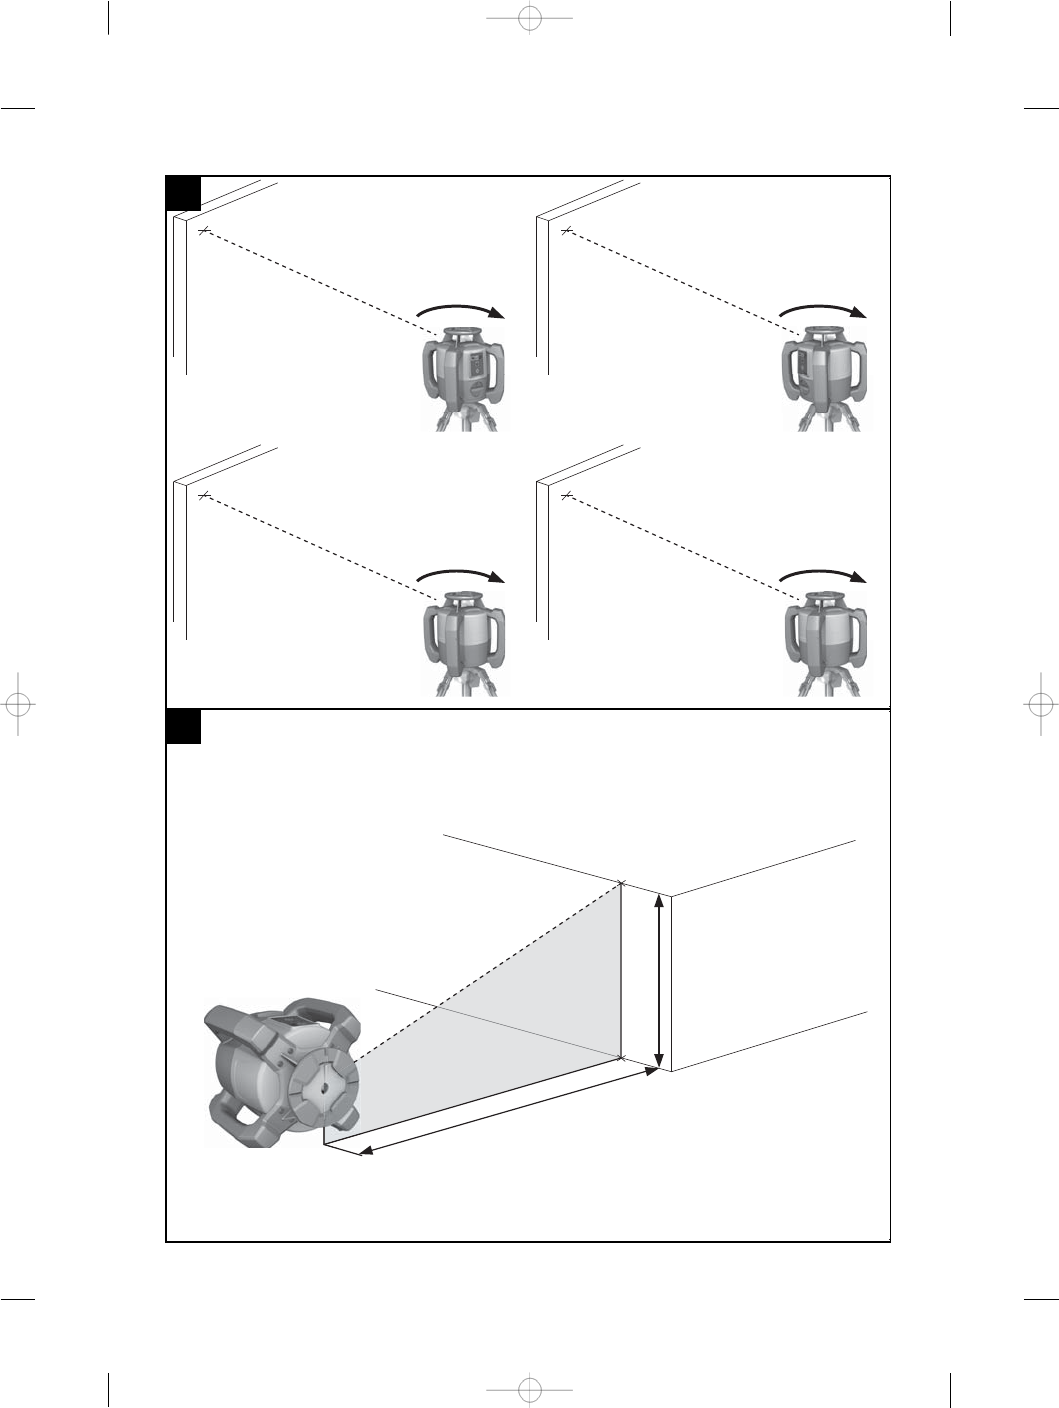 Turning shutter deeply Hilti PR3XR02 Rotating Laser User Manual